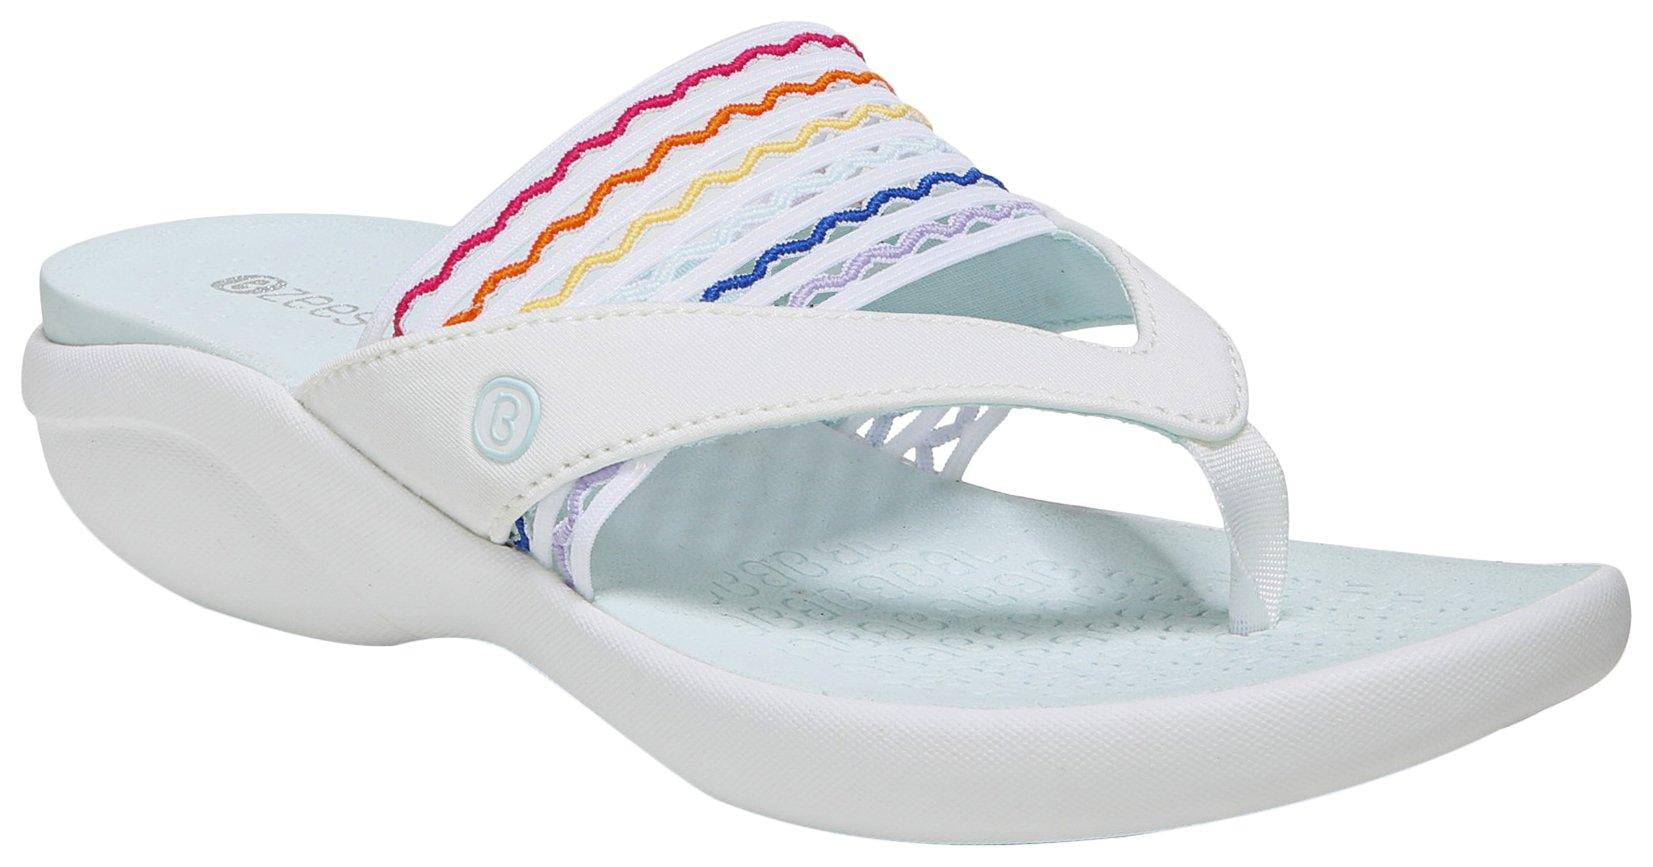 Womens Cabana Flops 8.5 White rainbow - Walmart.com